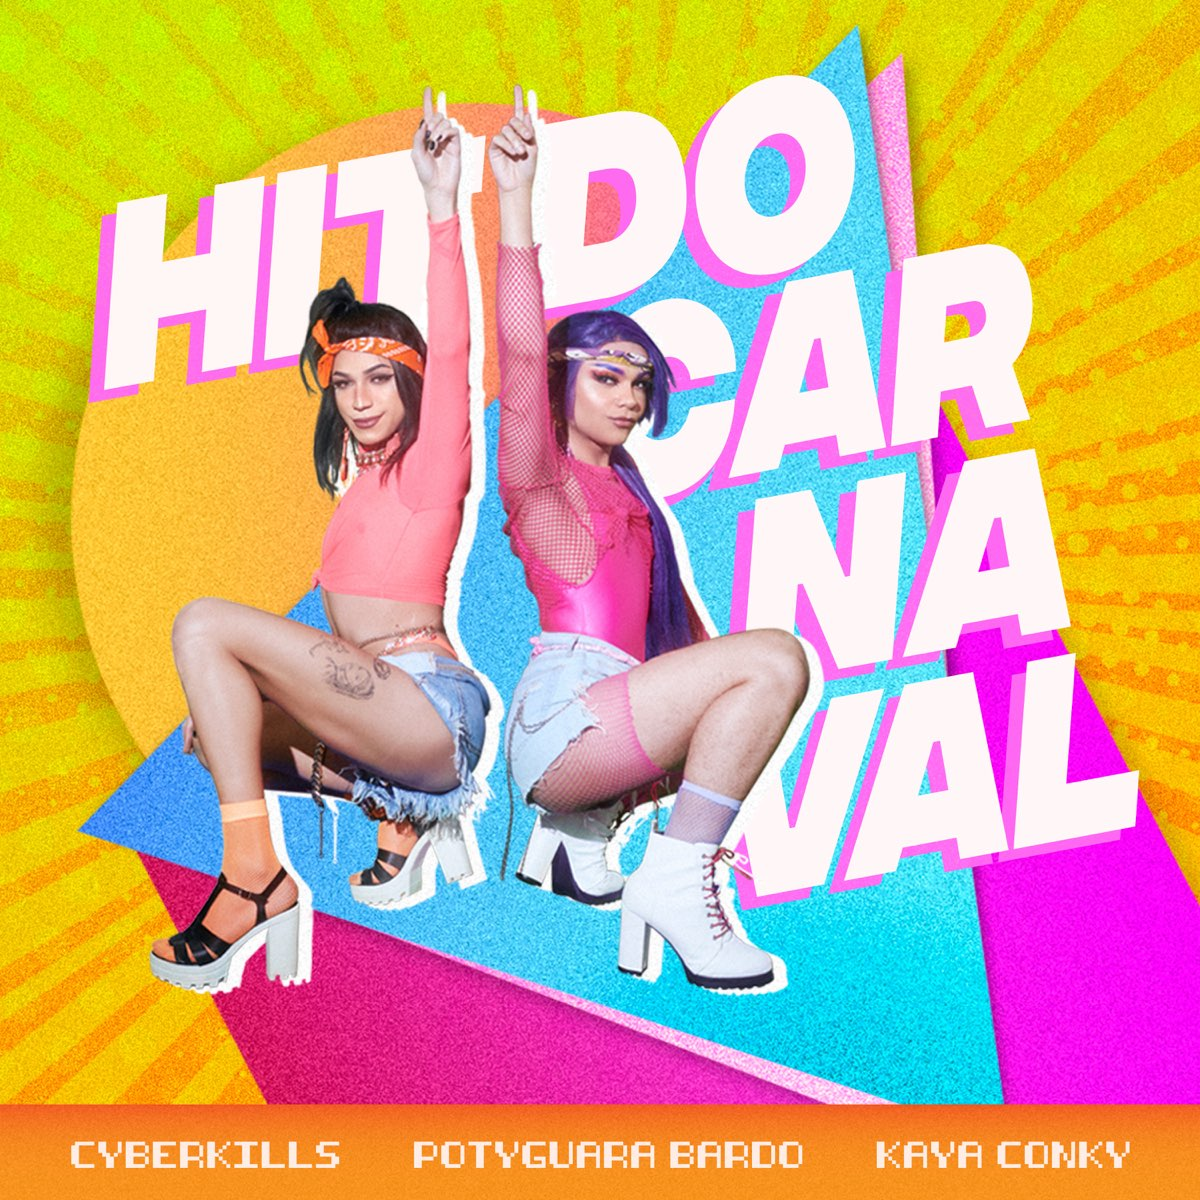 CyberKills, Potyguara Bardo, & Kaya Conky Hit do Carnaval cover artwork